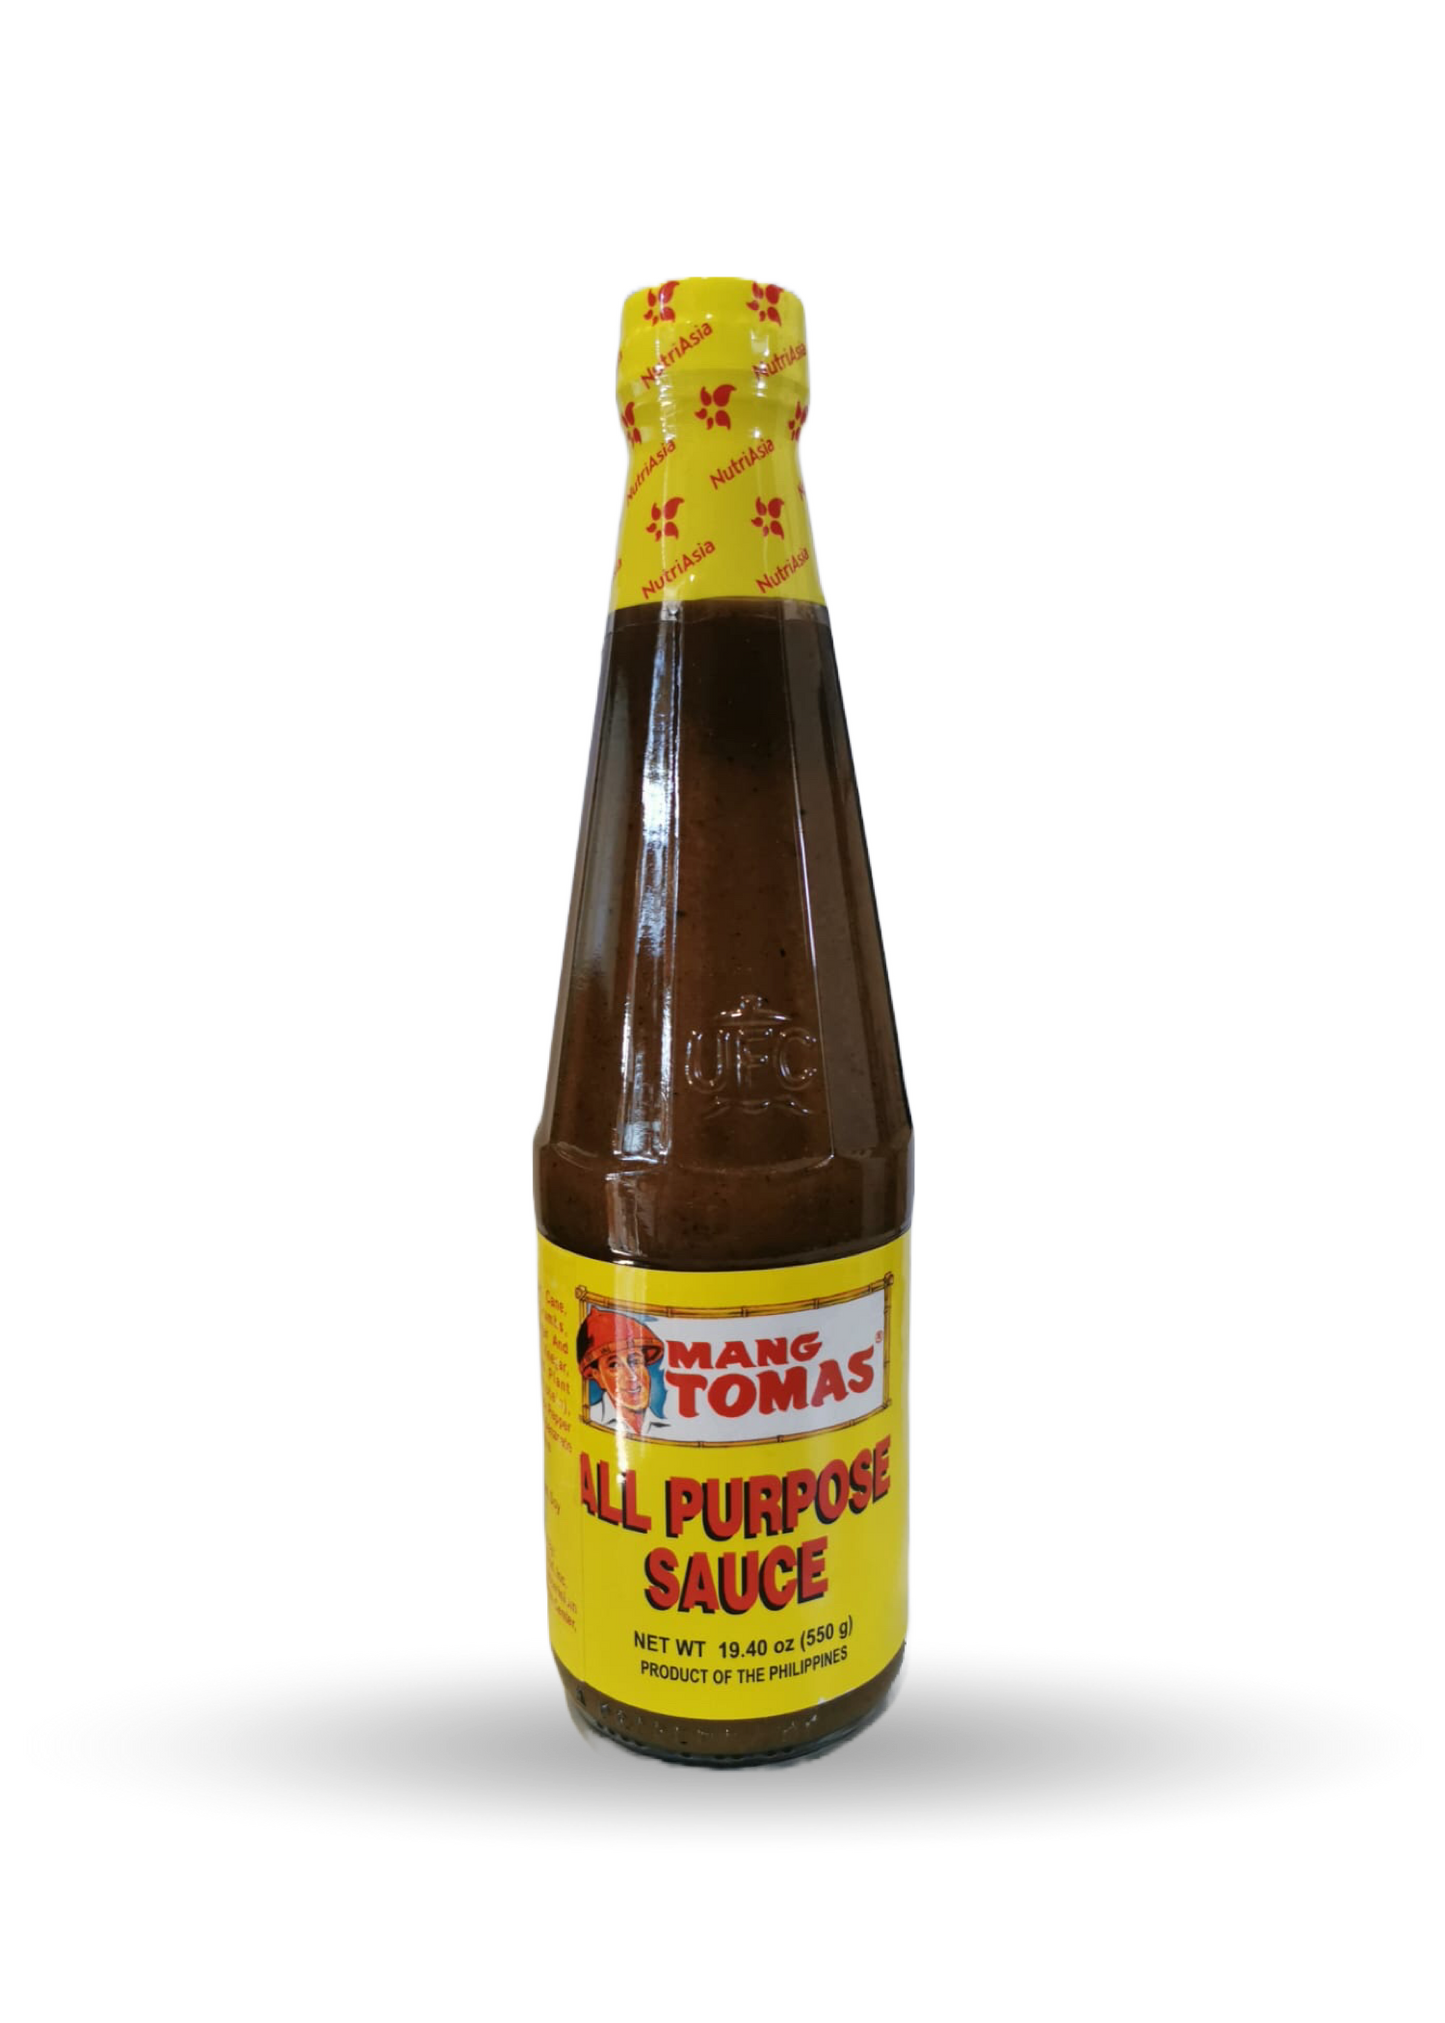 Mang Tomas | All Purpose Sauce Regular